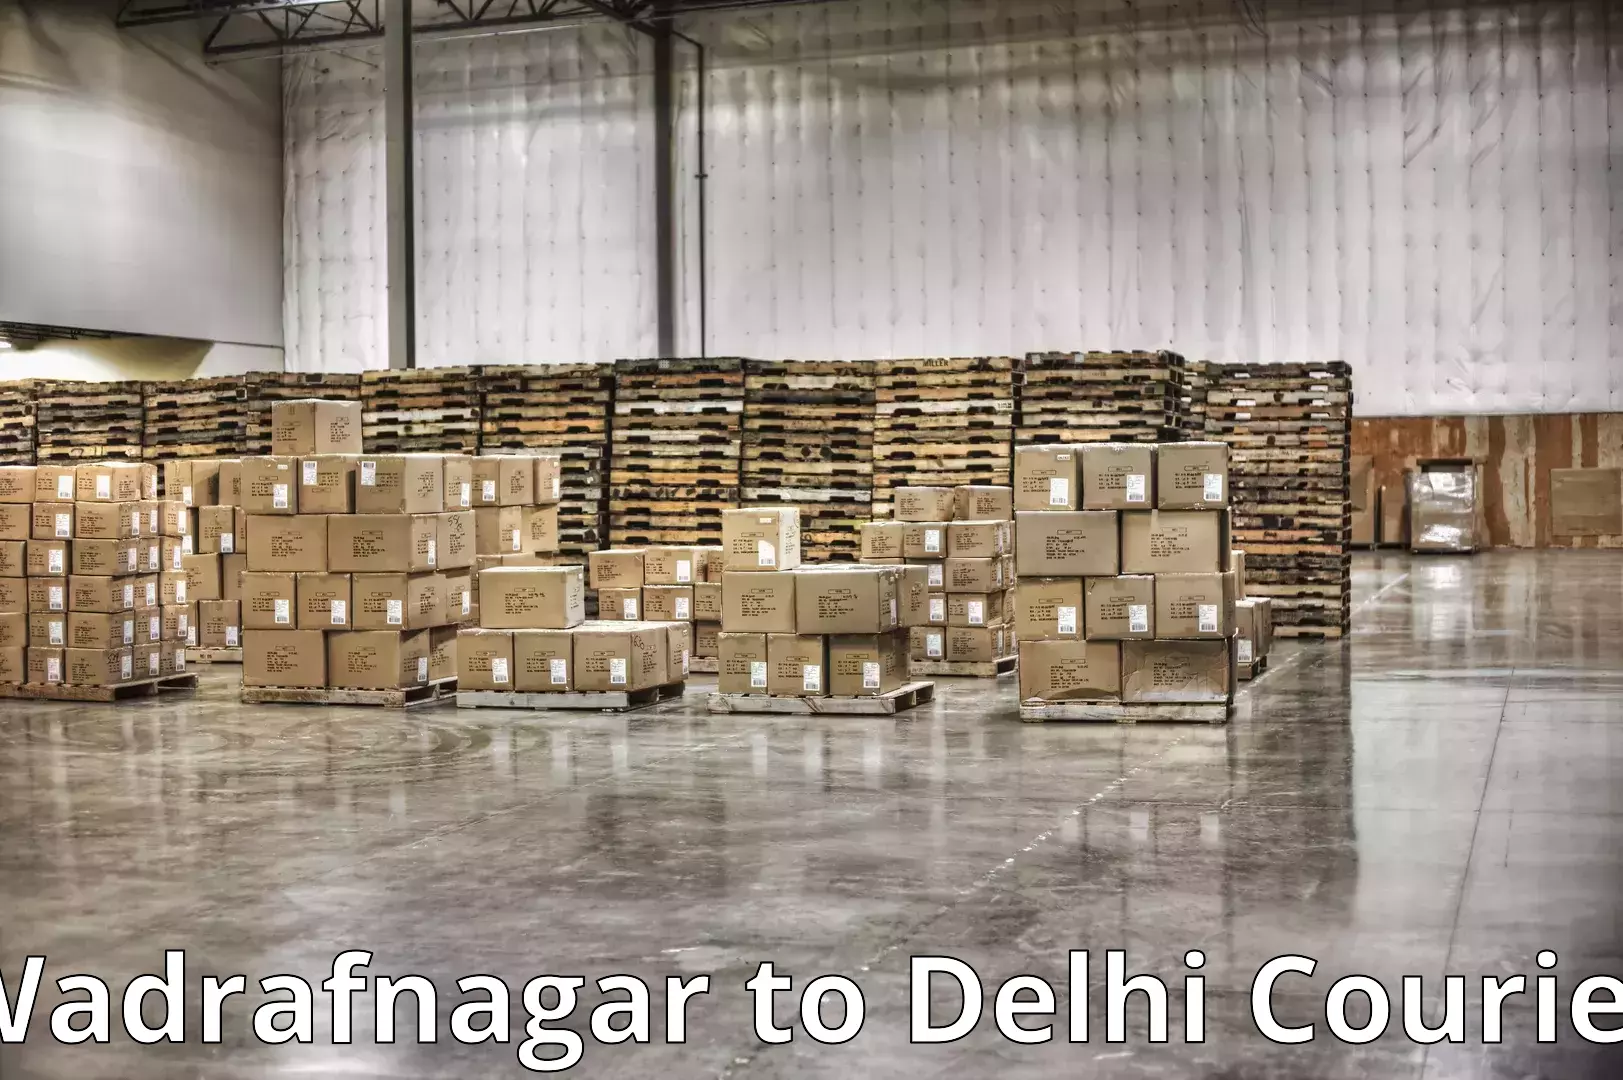 Seamless moving process Wadrafnagar to Krishna Nagar